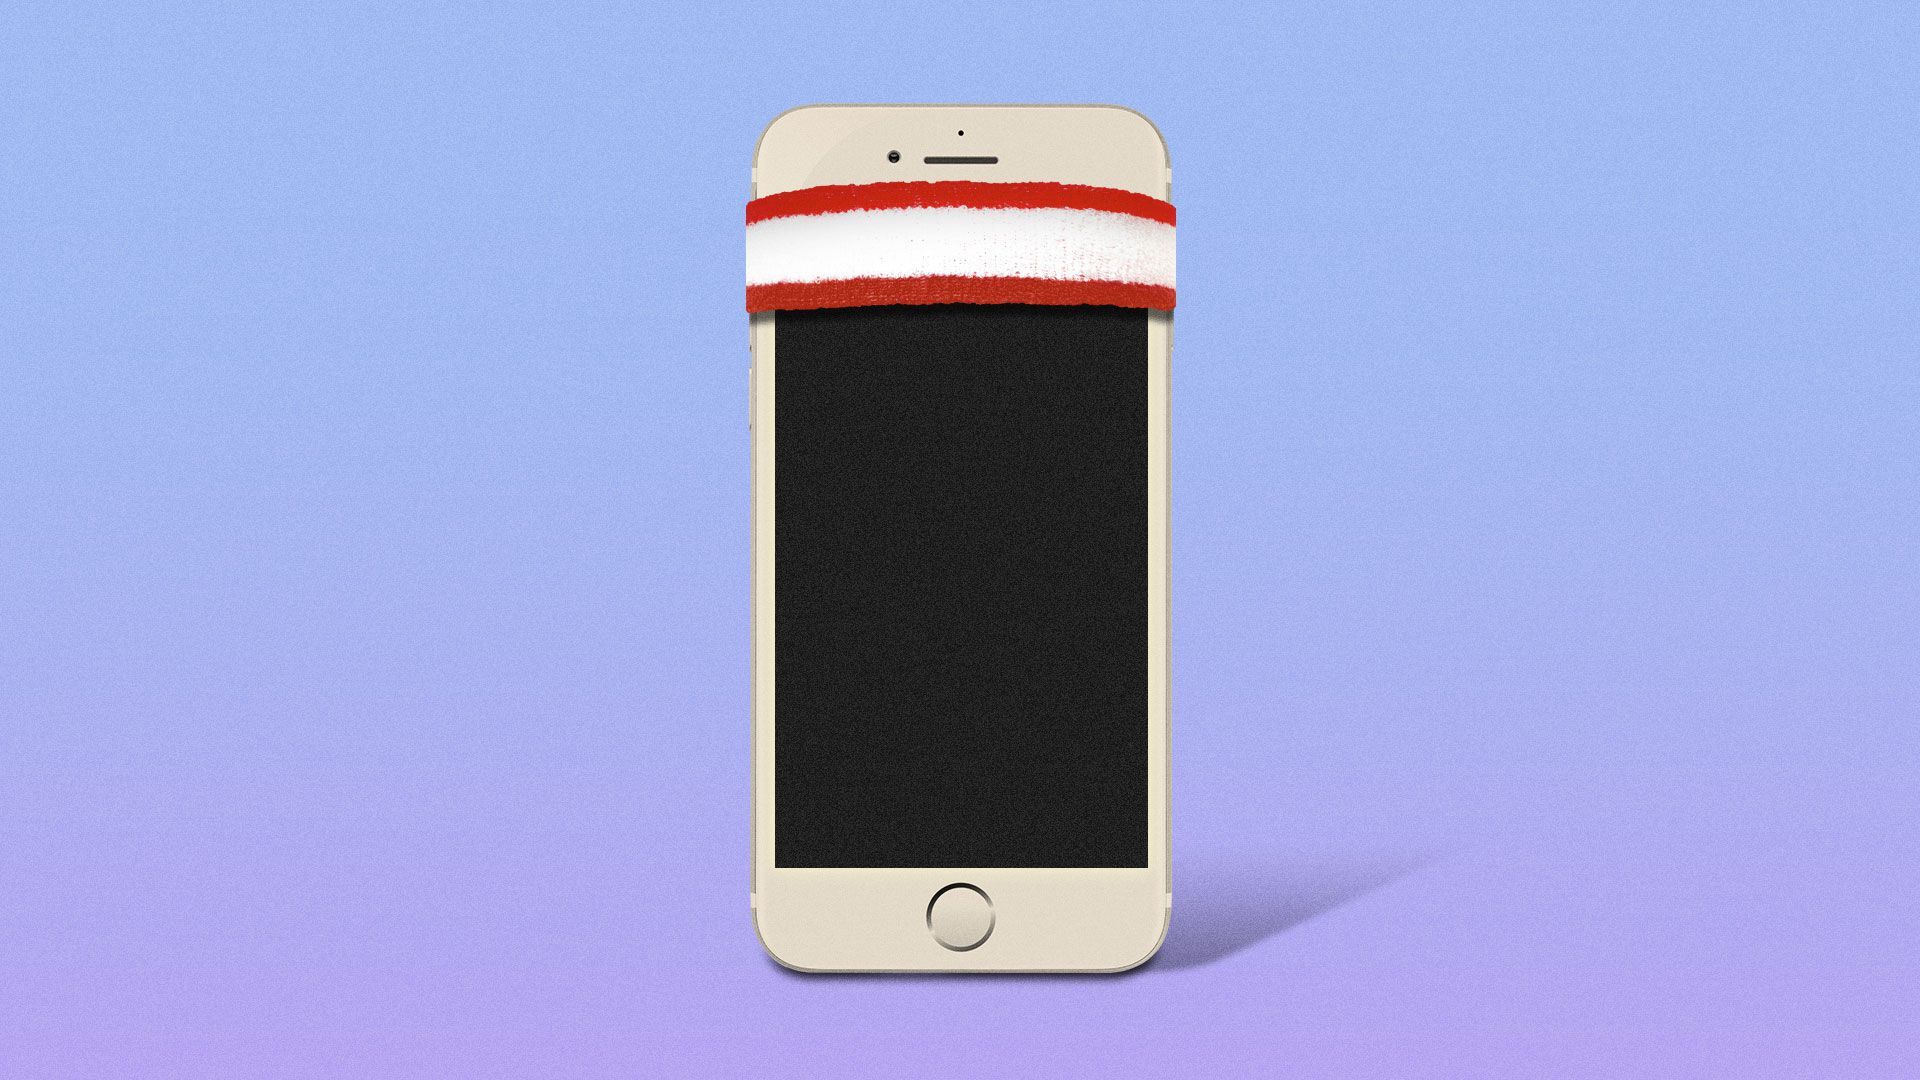 Illustration of a smartphone wearing a sweatband